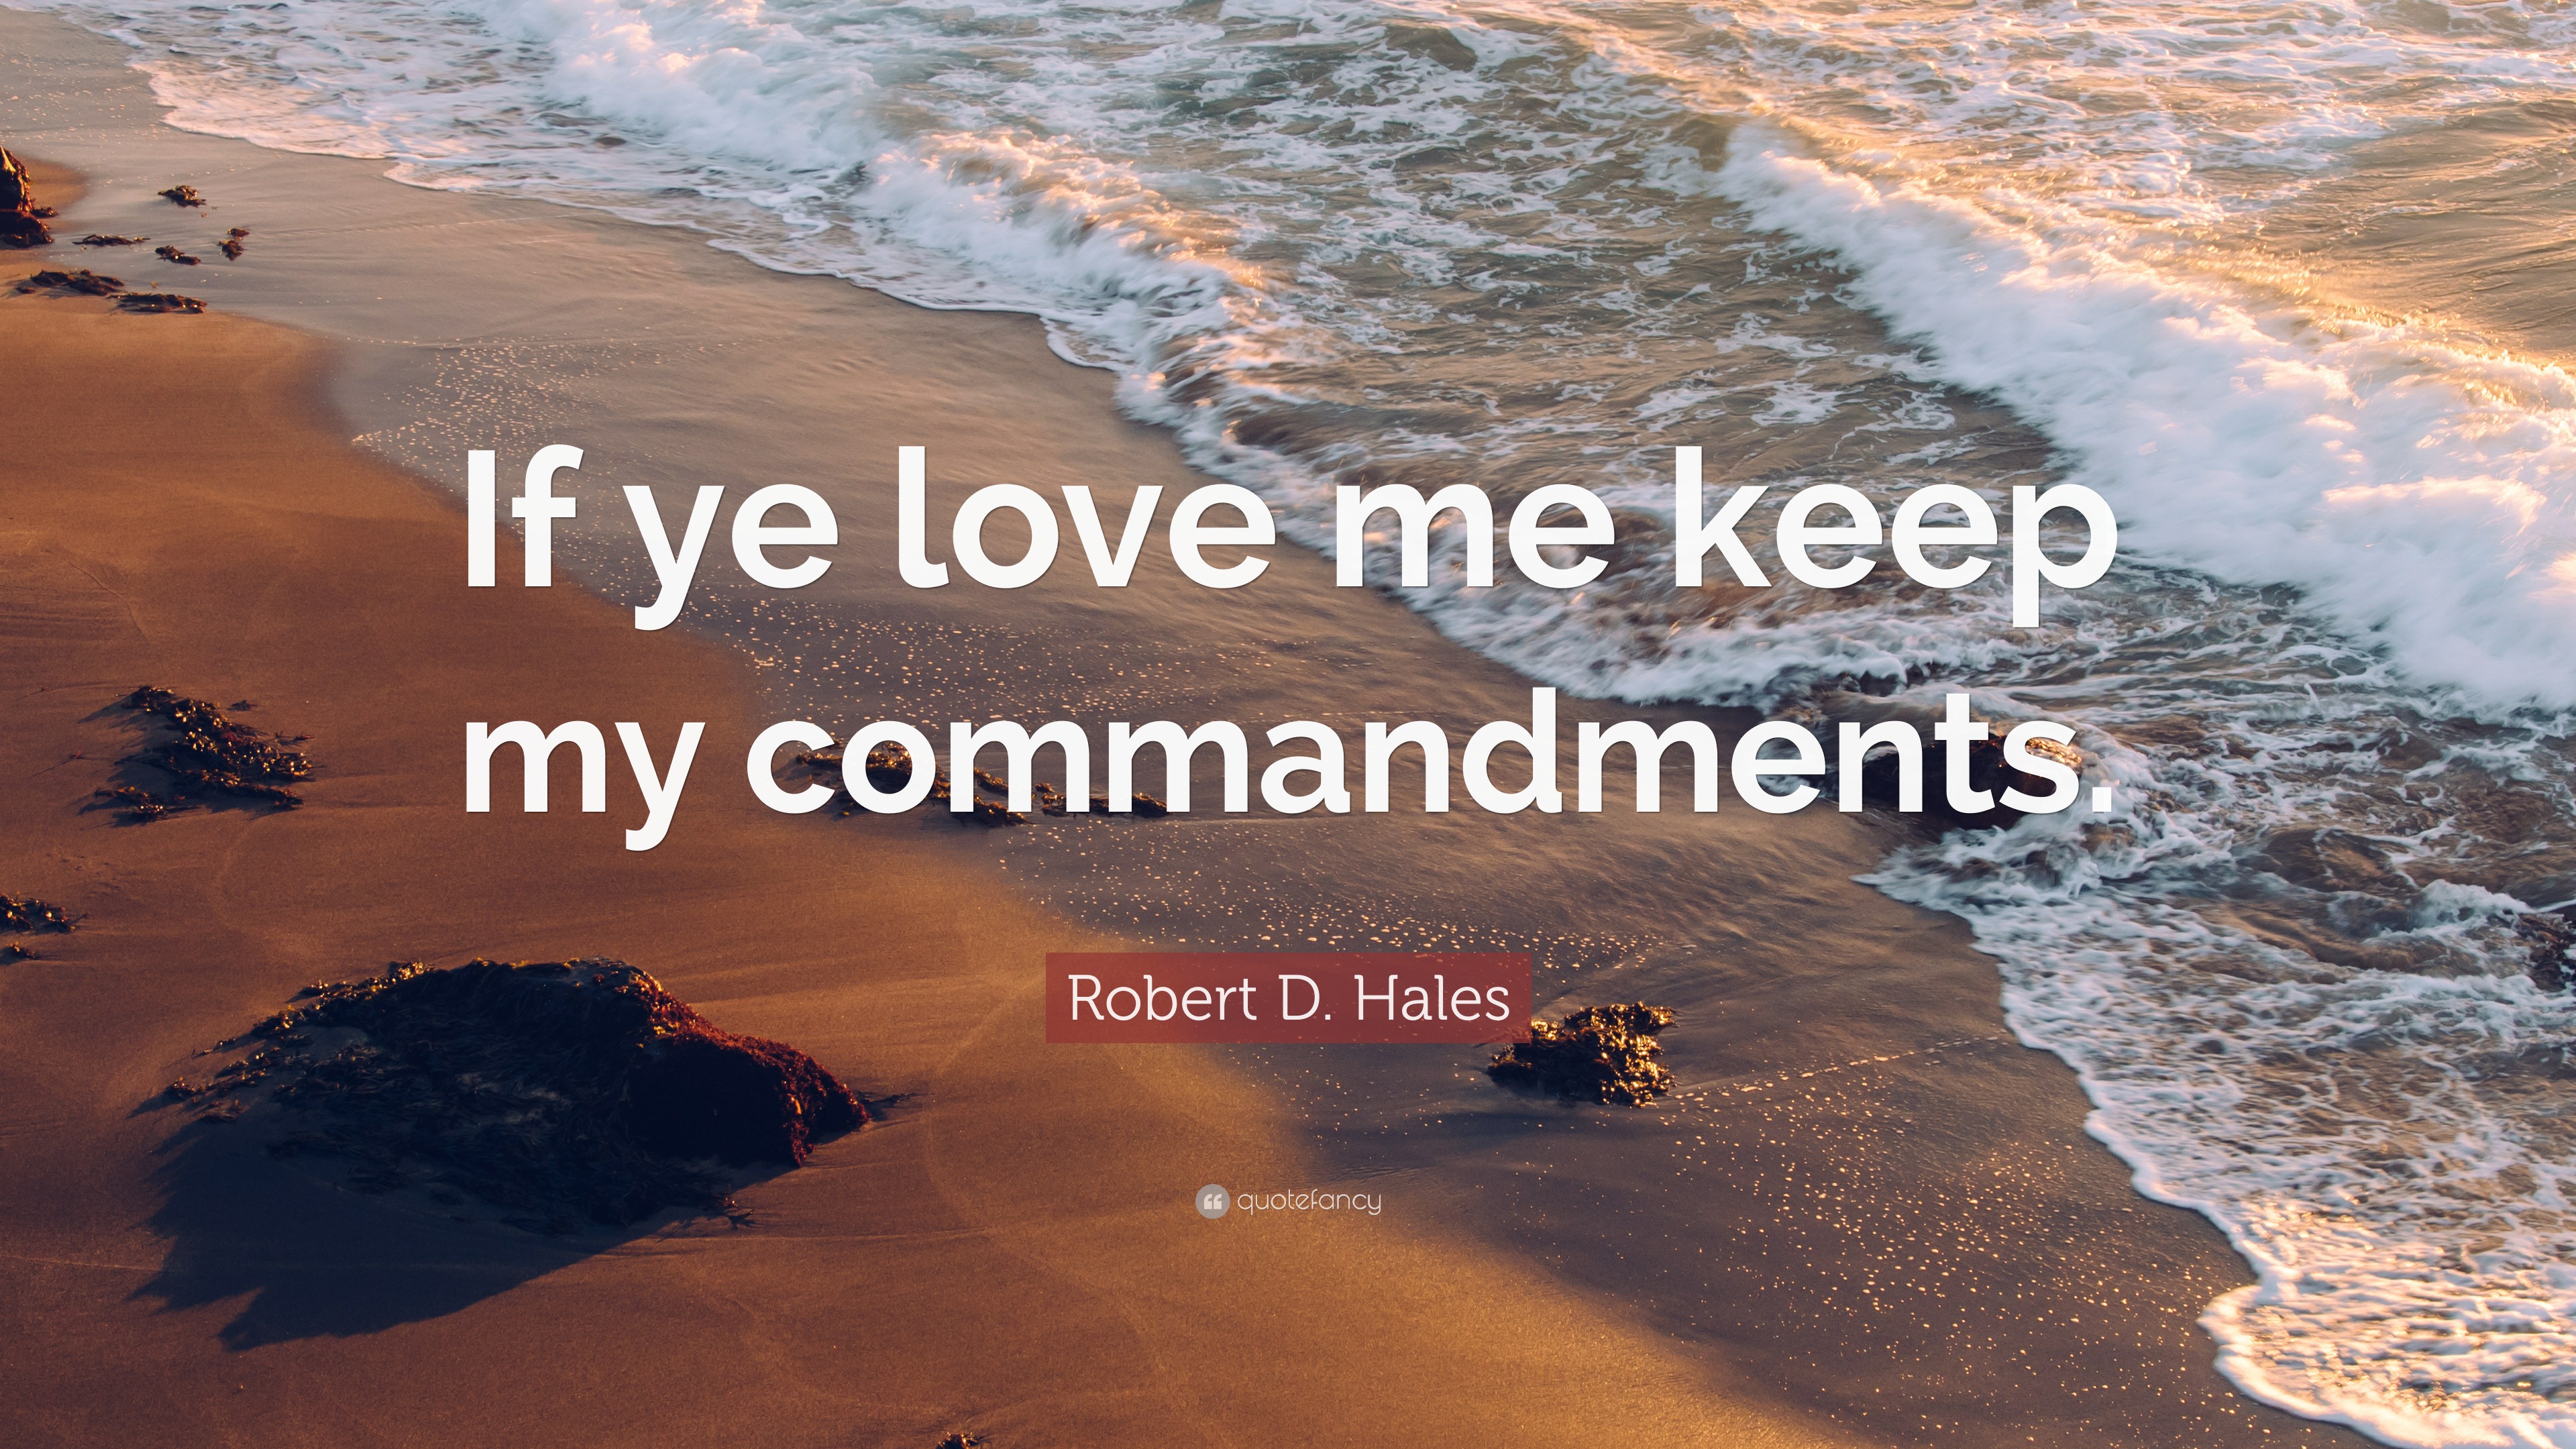 if you love me keep my commandments and my commandments